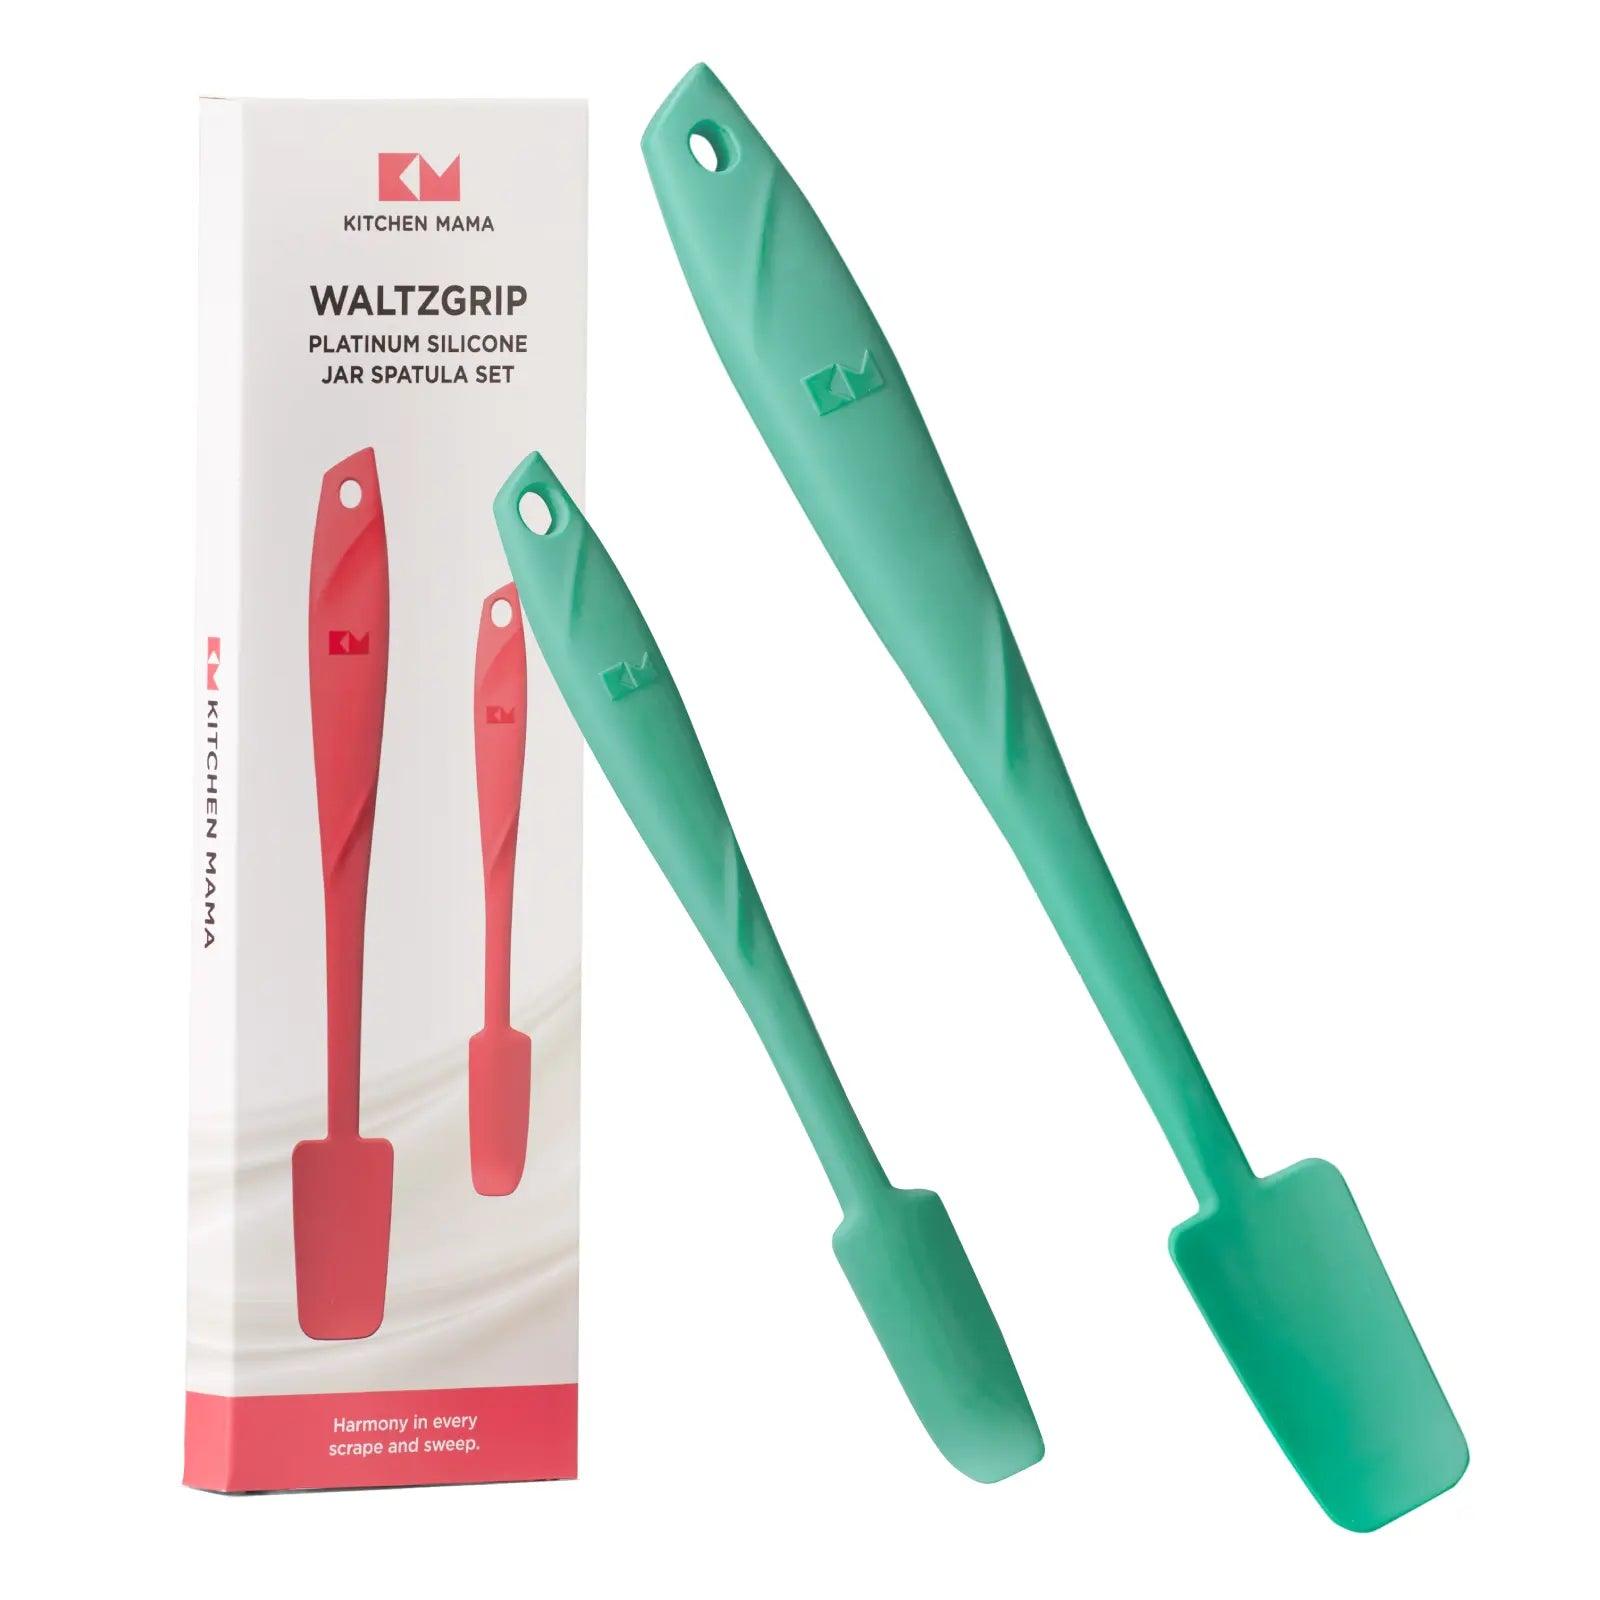 Kitchen Mama silicone jar spatula, Waltzgrip, platinum silicone jar spatula set, teal